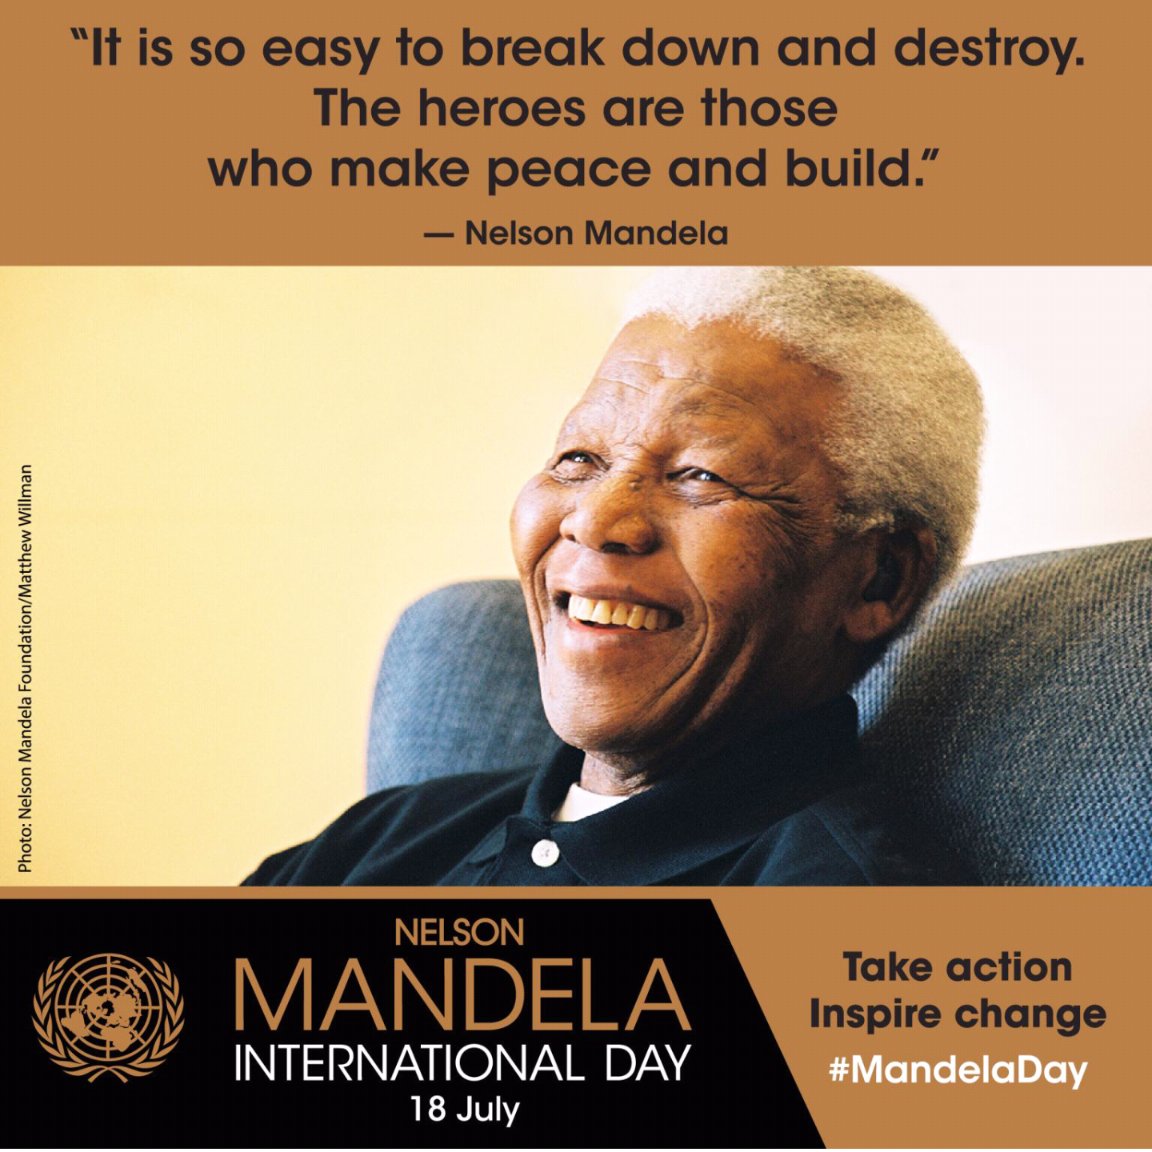 👇 
#Mandela #stopdestroying #buildsomethingbetter